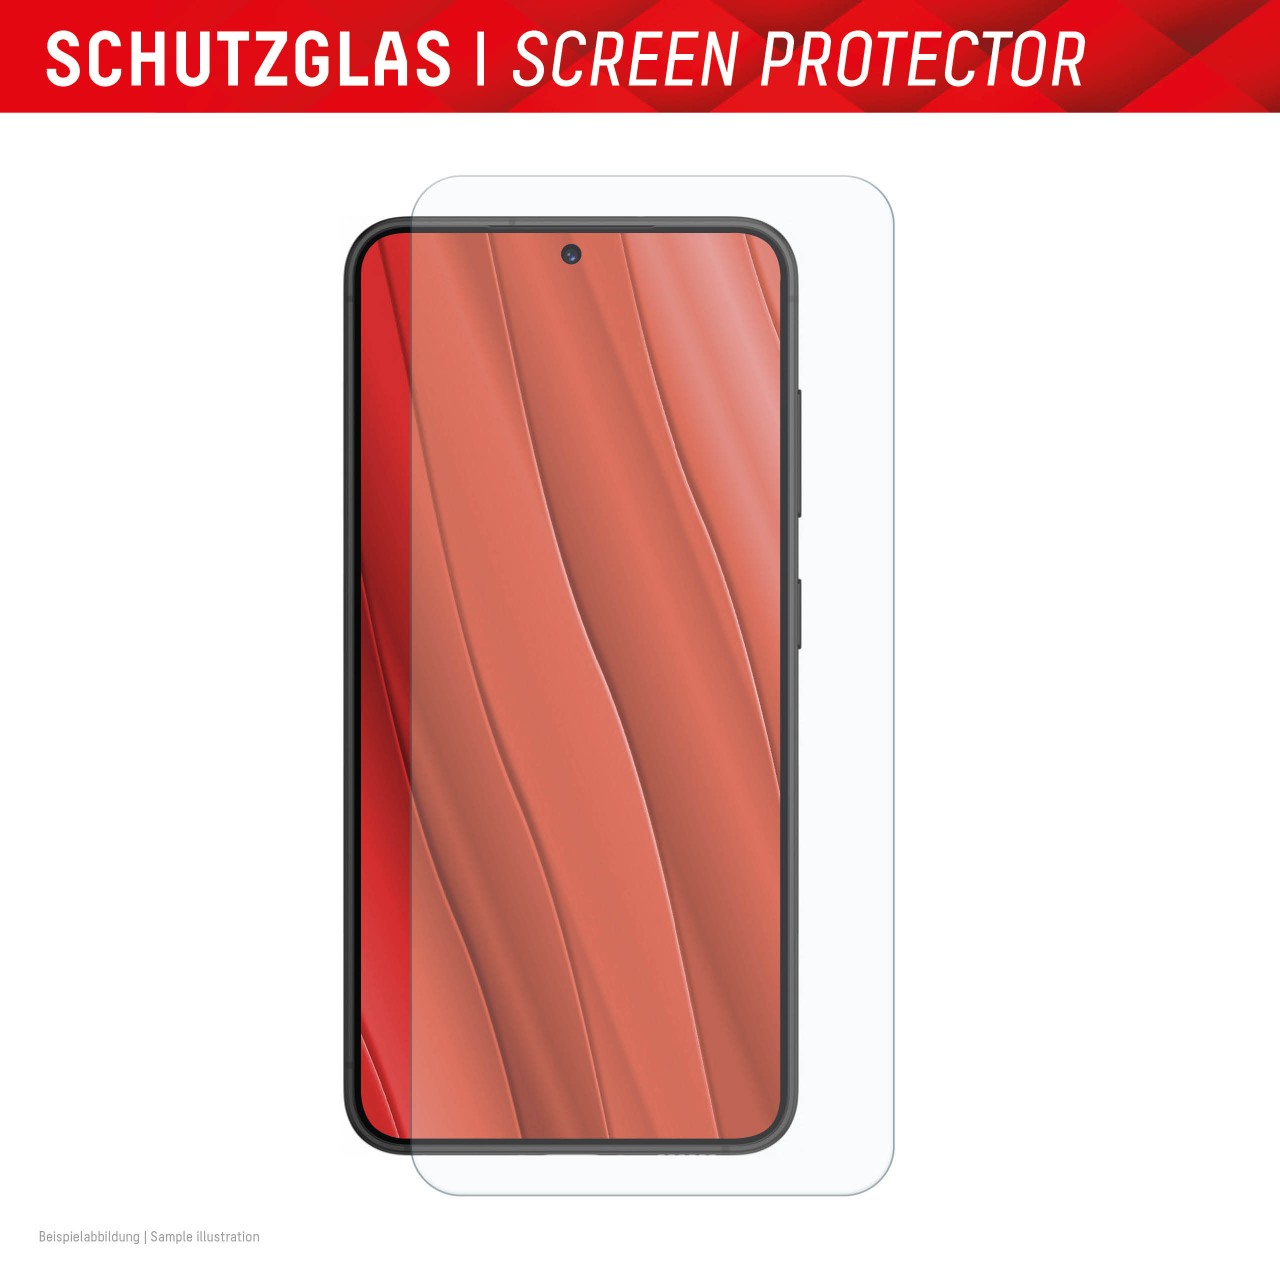 Samsung Galaxy S24+ Screen Protector (2D)